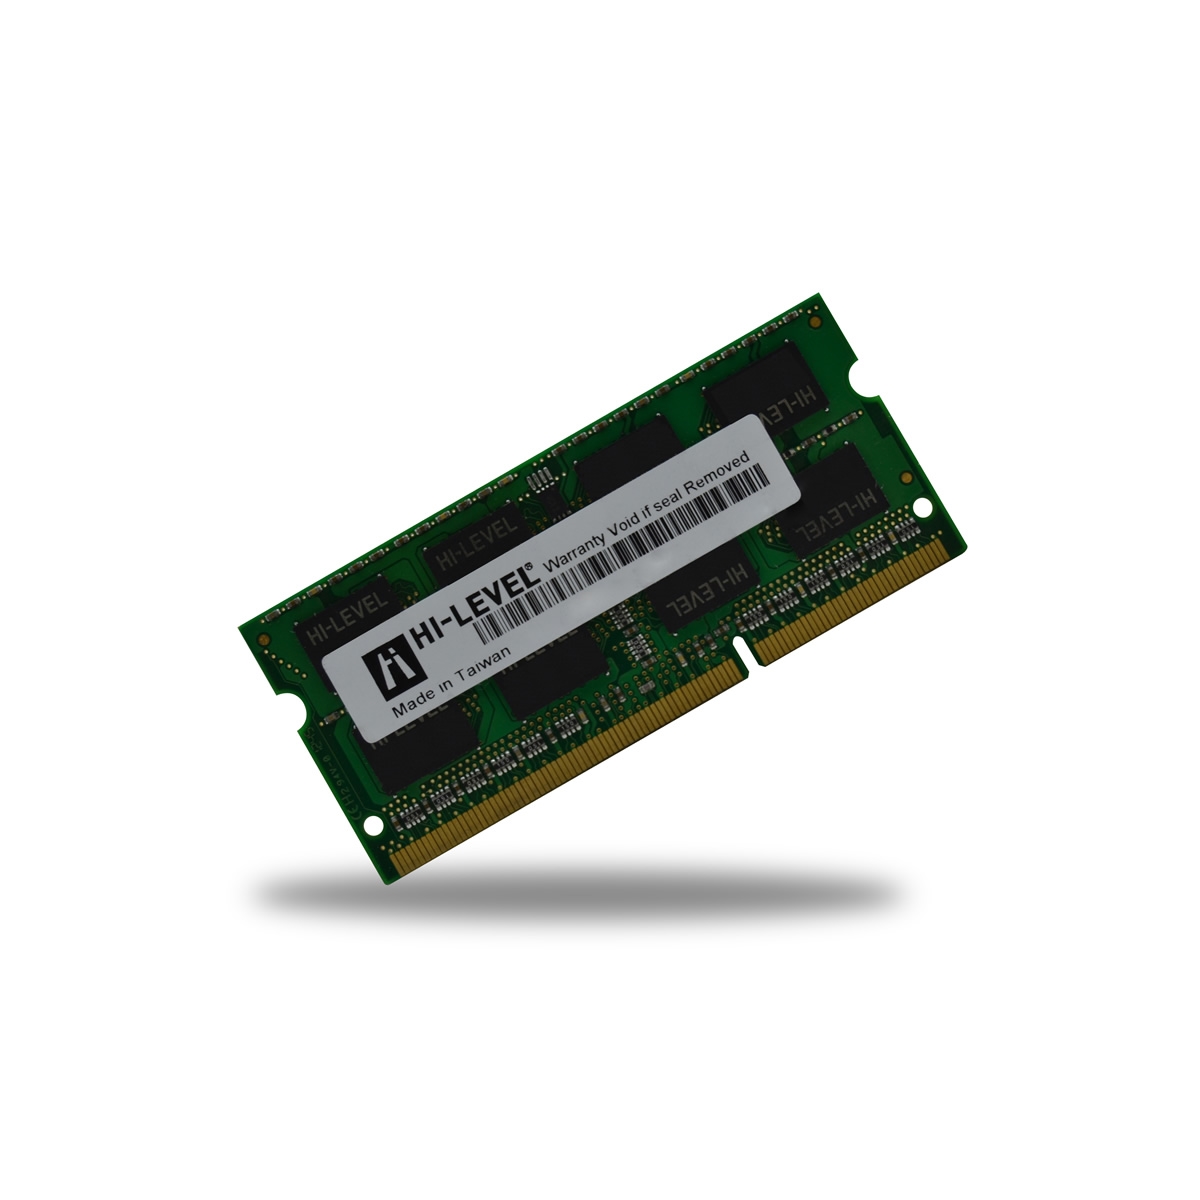 HI-LEVEL 1GB 667MHz DDR2 HLV-SOPC5300/1G NOTEBOOK RAM